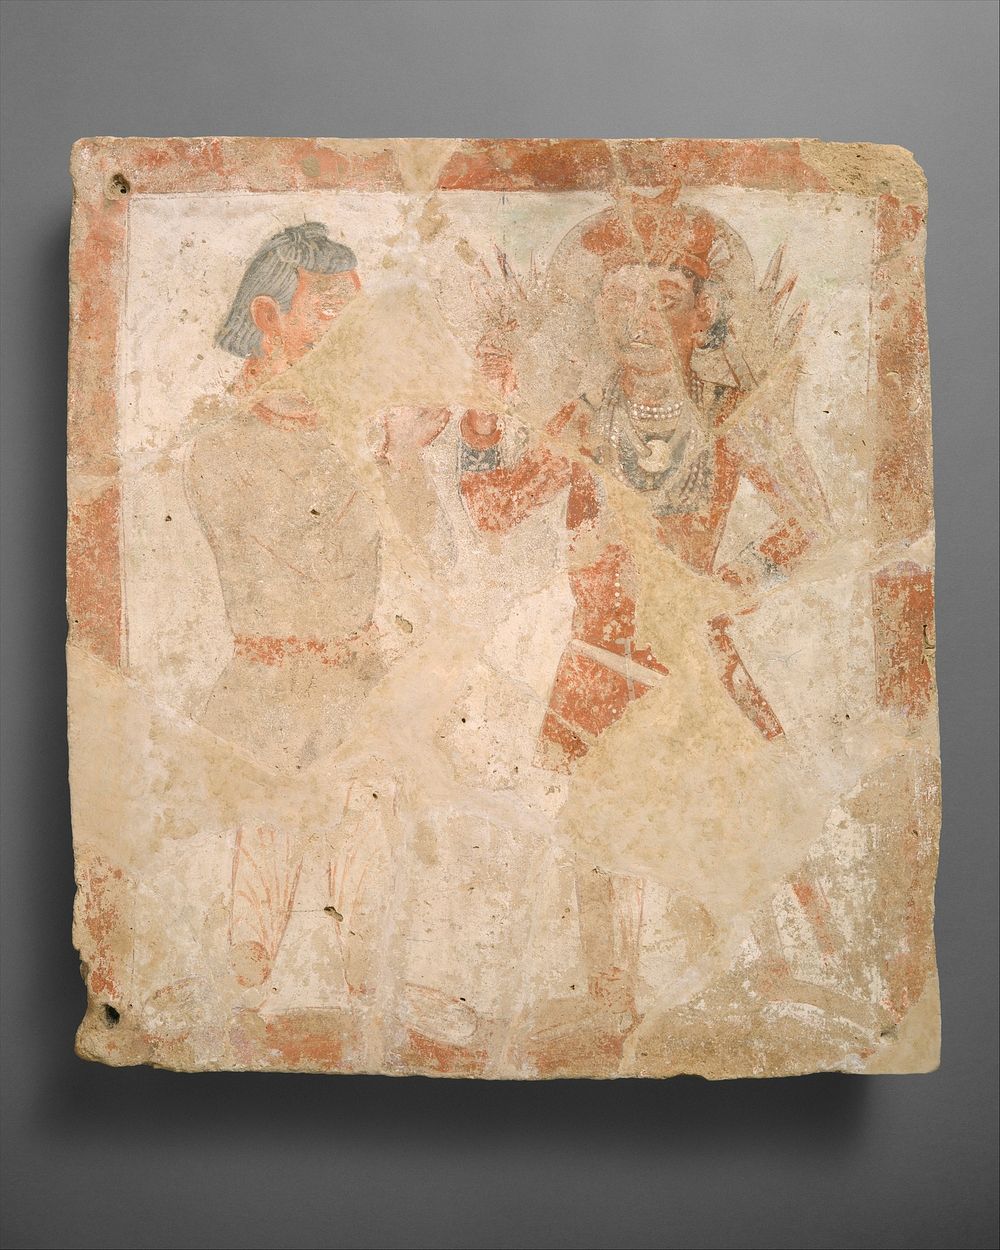 Panel with the god Pharro and worshiper, Kushan